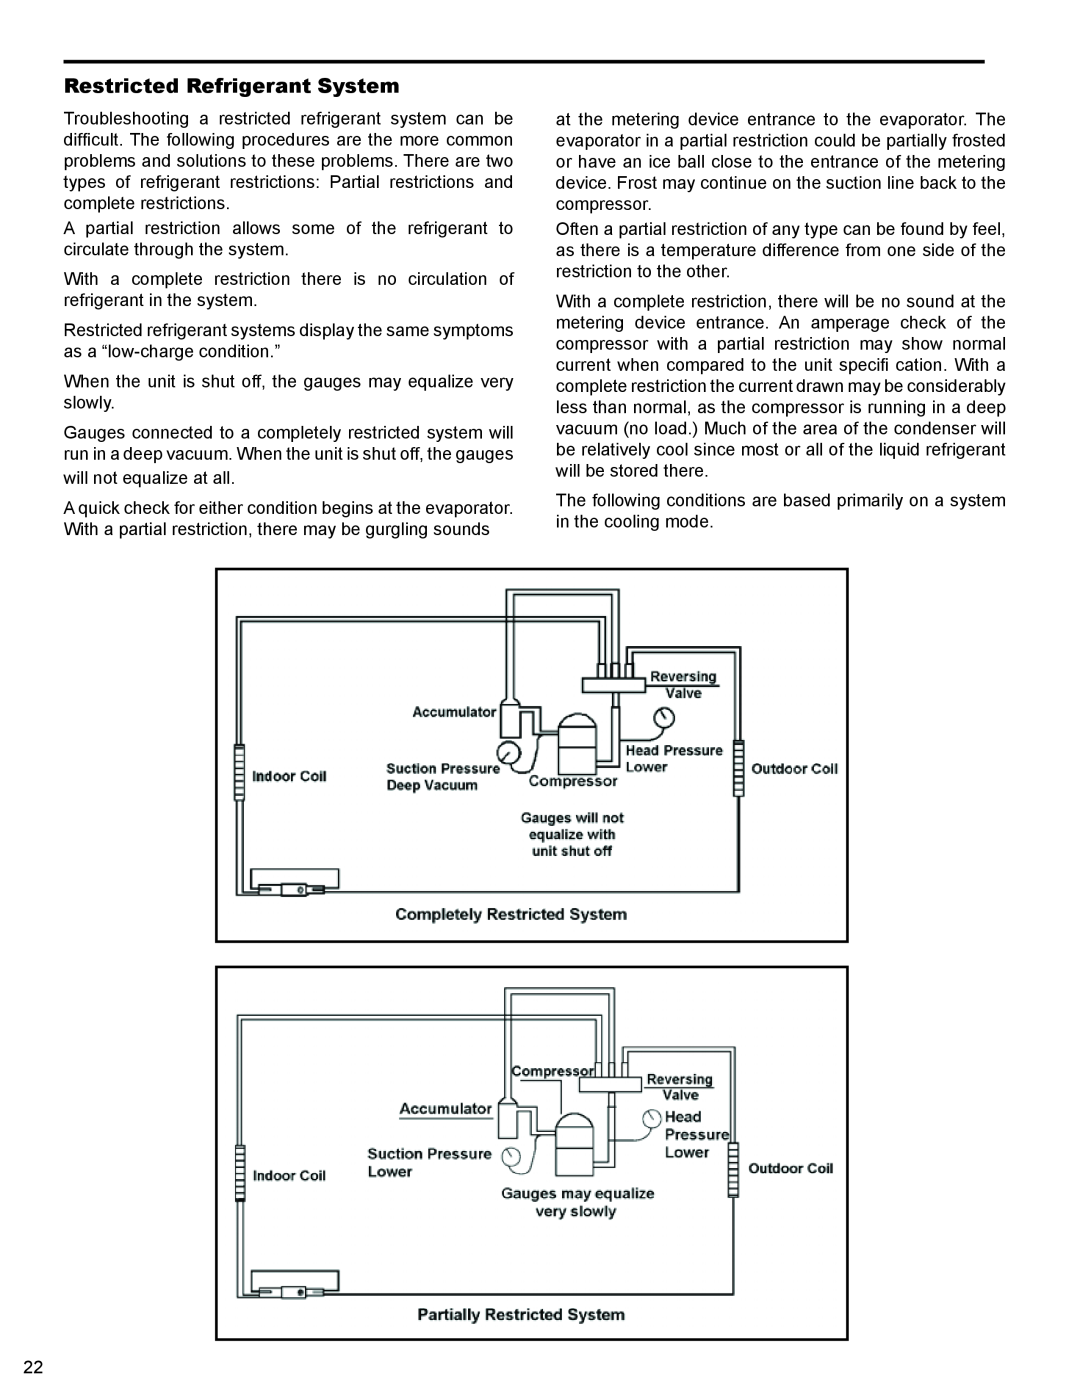 Friedrich 2008, 2009 service manual Restricted Refrigerant System 